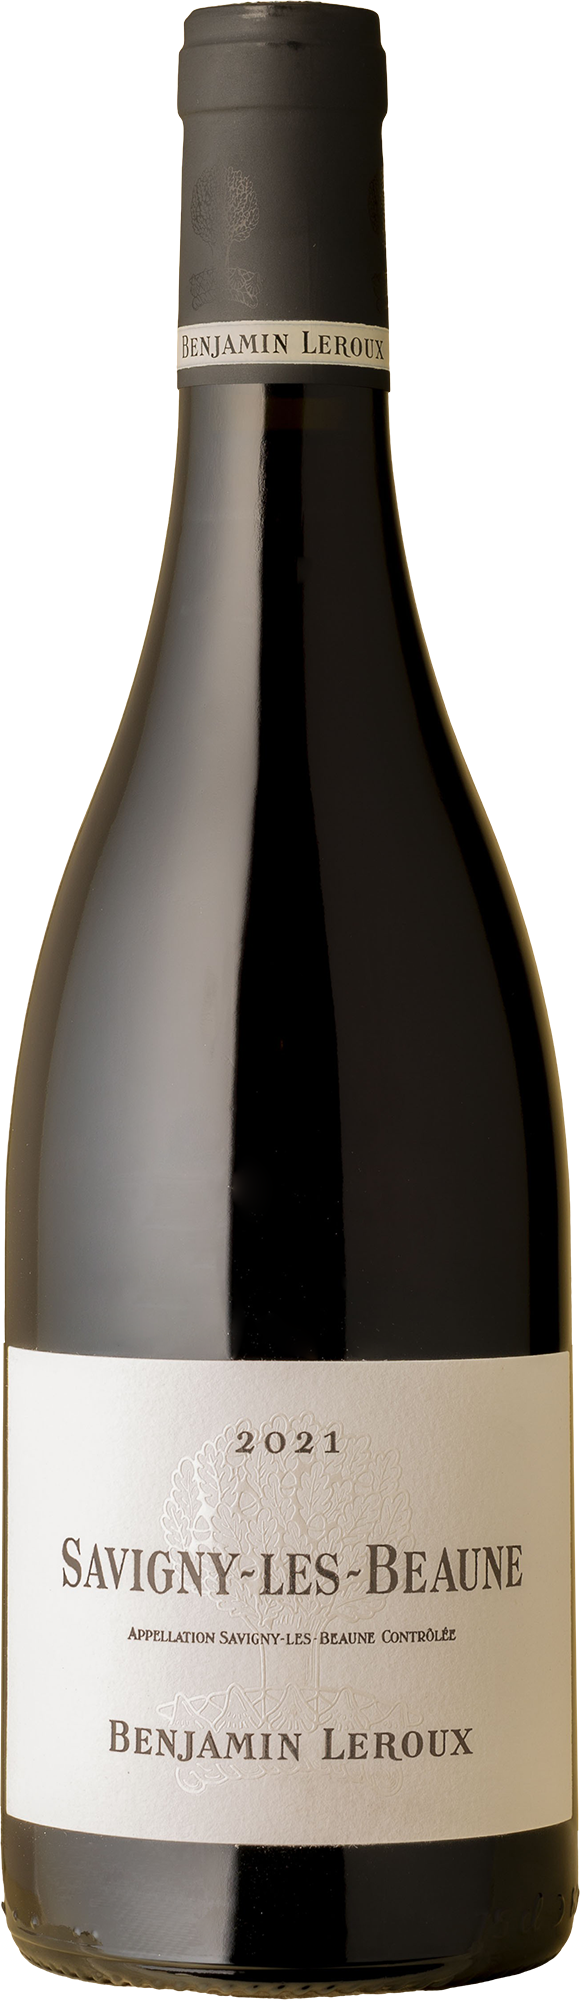 Benjamin Leroux - Savigny-lès-Beaune Pinot Fin 2021 Red Wine